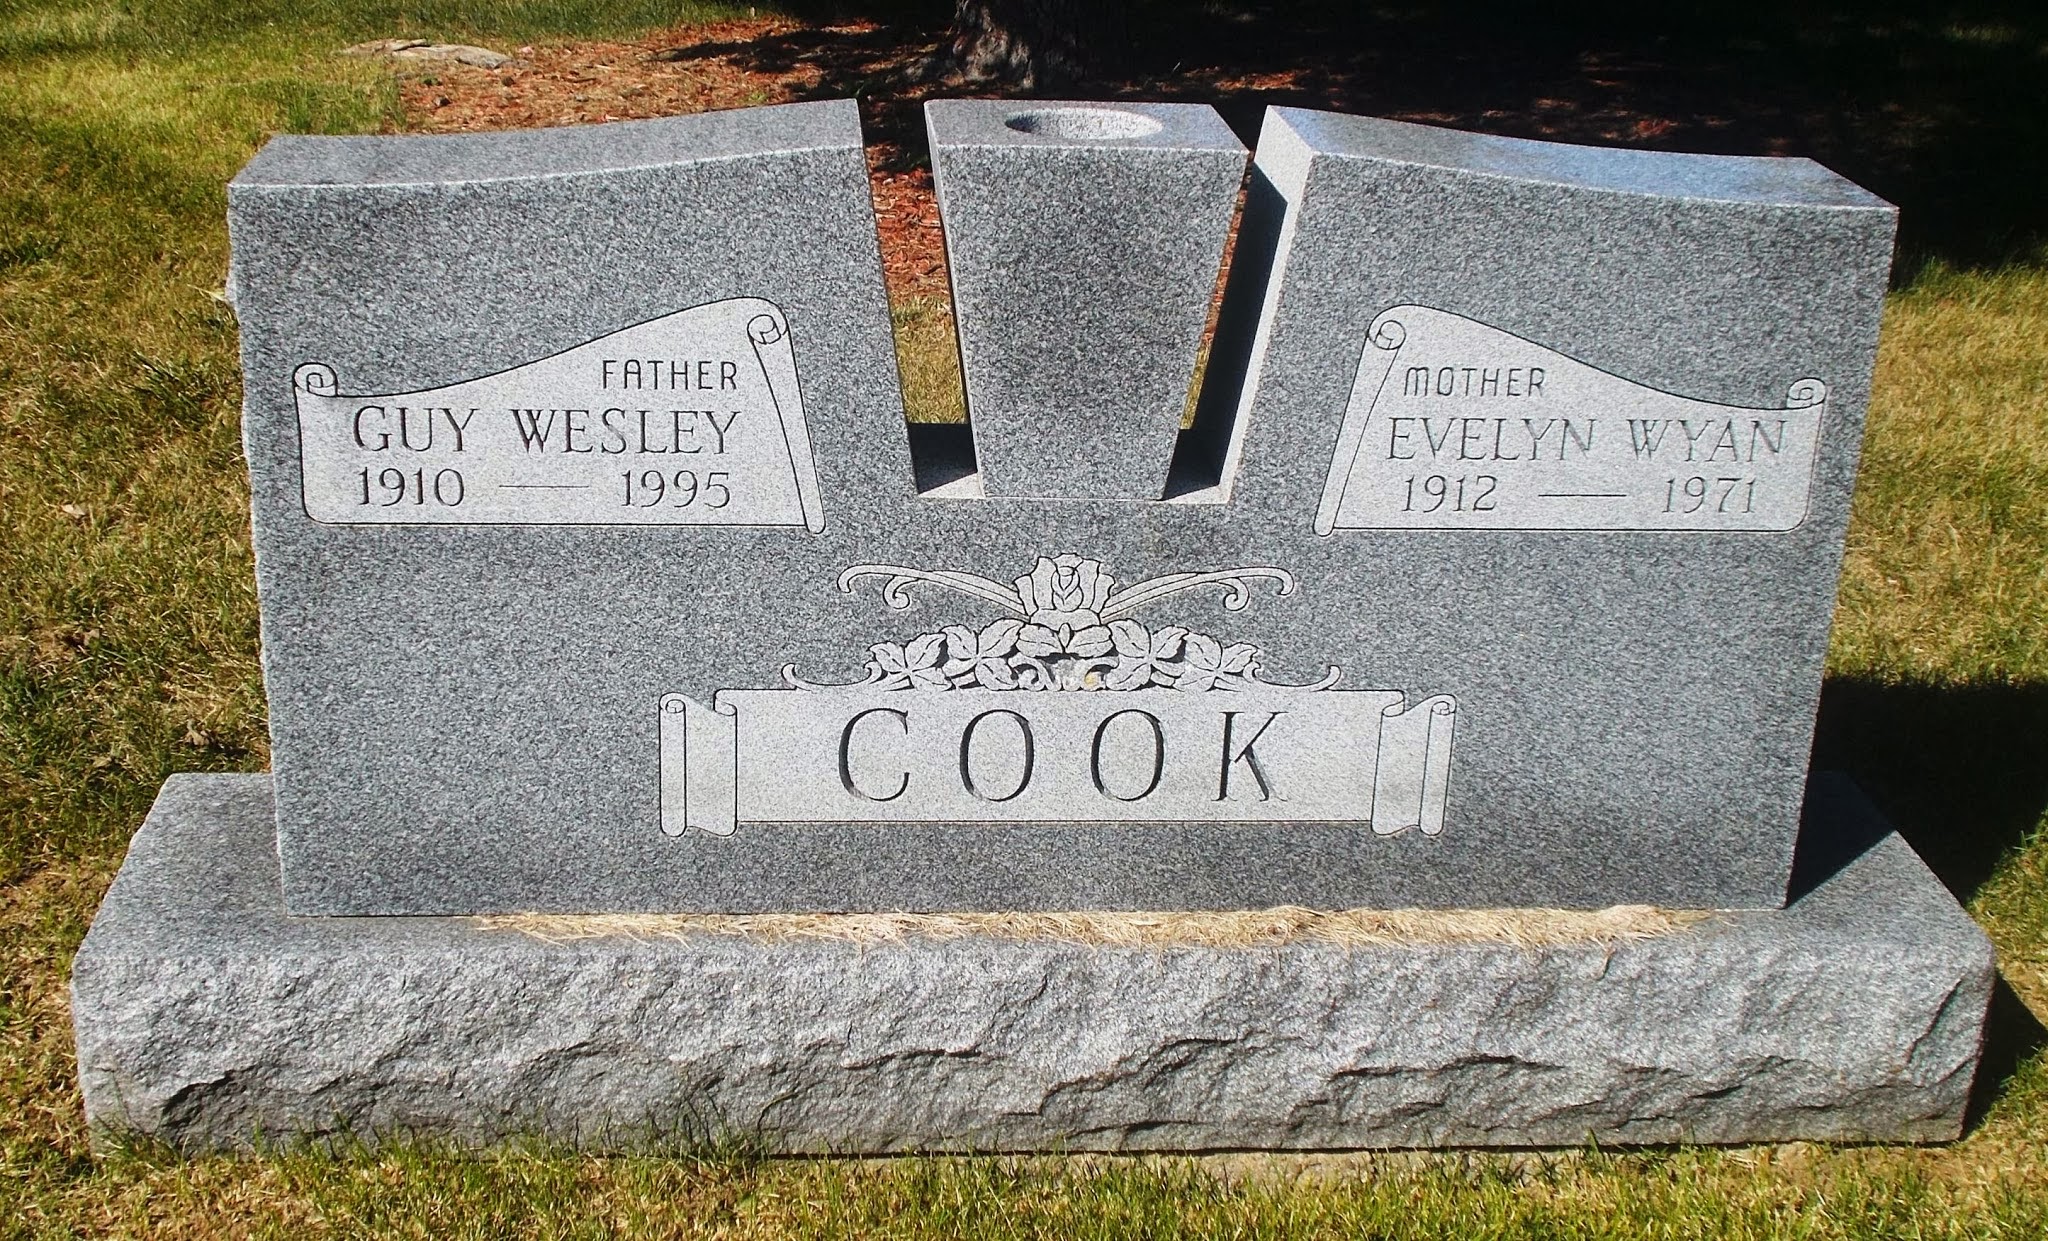 Guy Wesley Cook